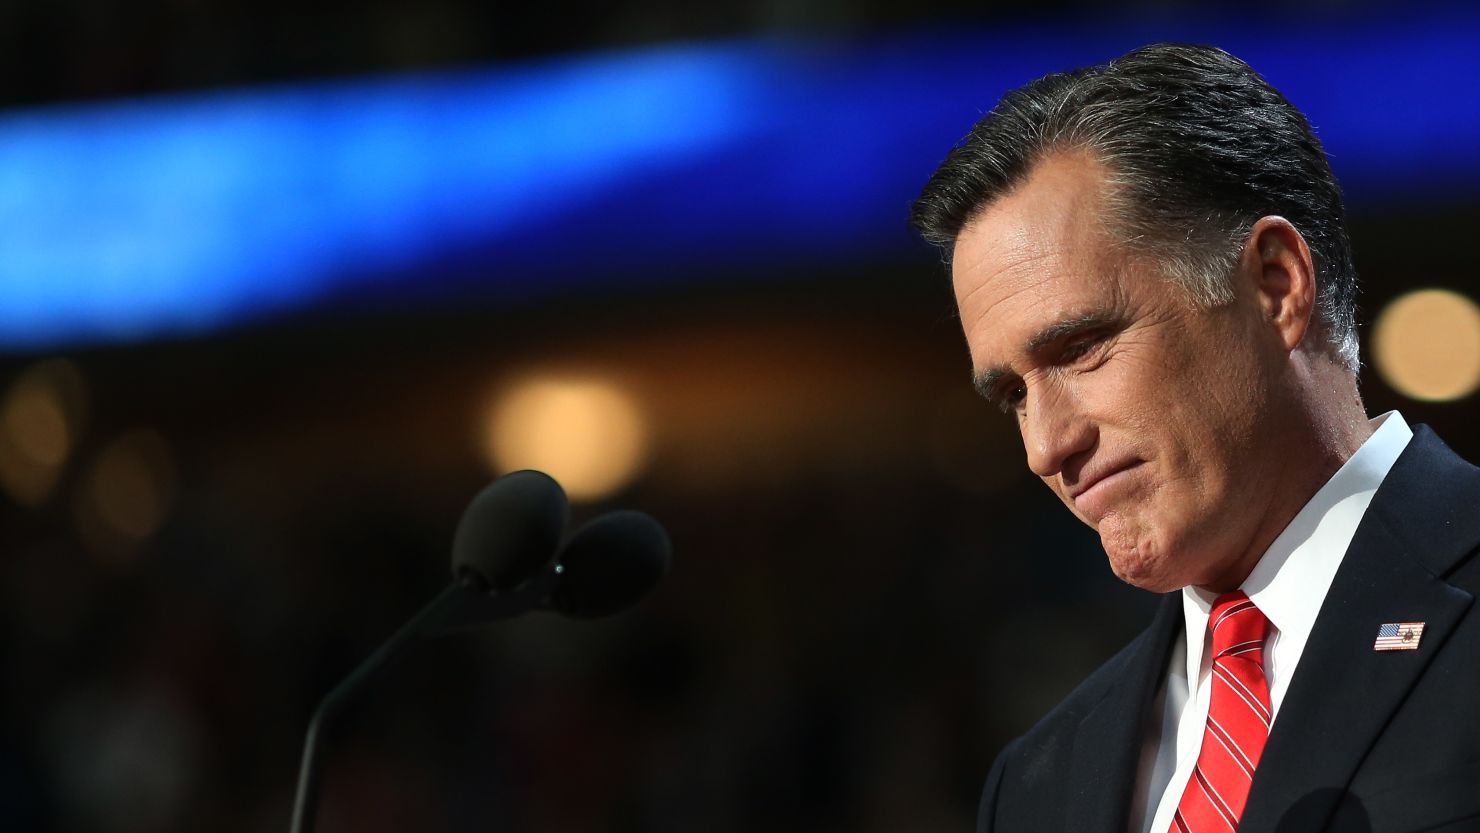 Mitt Romney used the tragedy of the killing of the U.S. ambassador to Libya to score political points, says John Avlon.